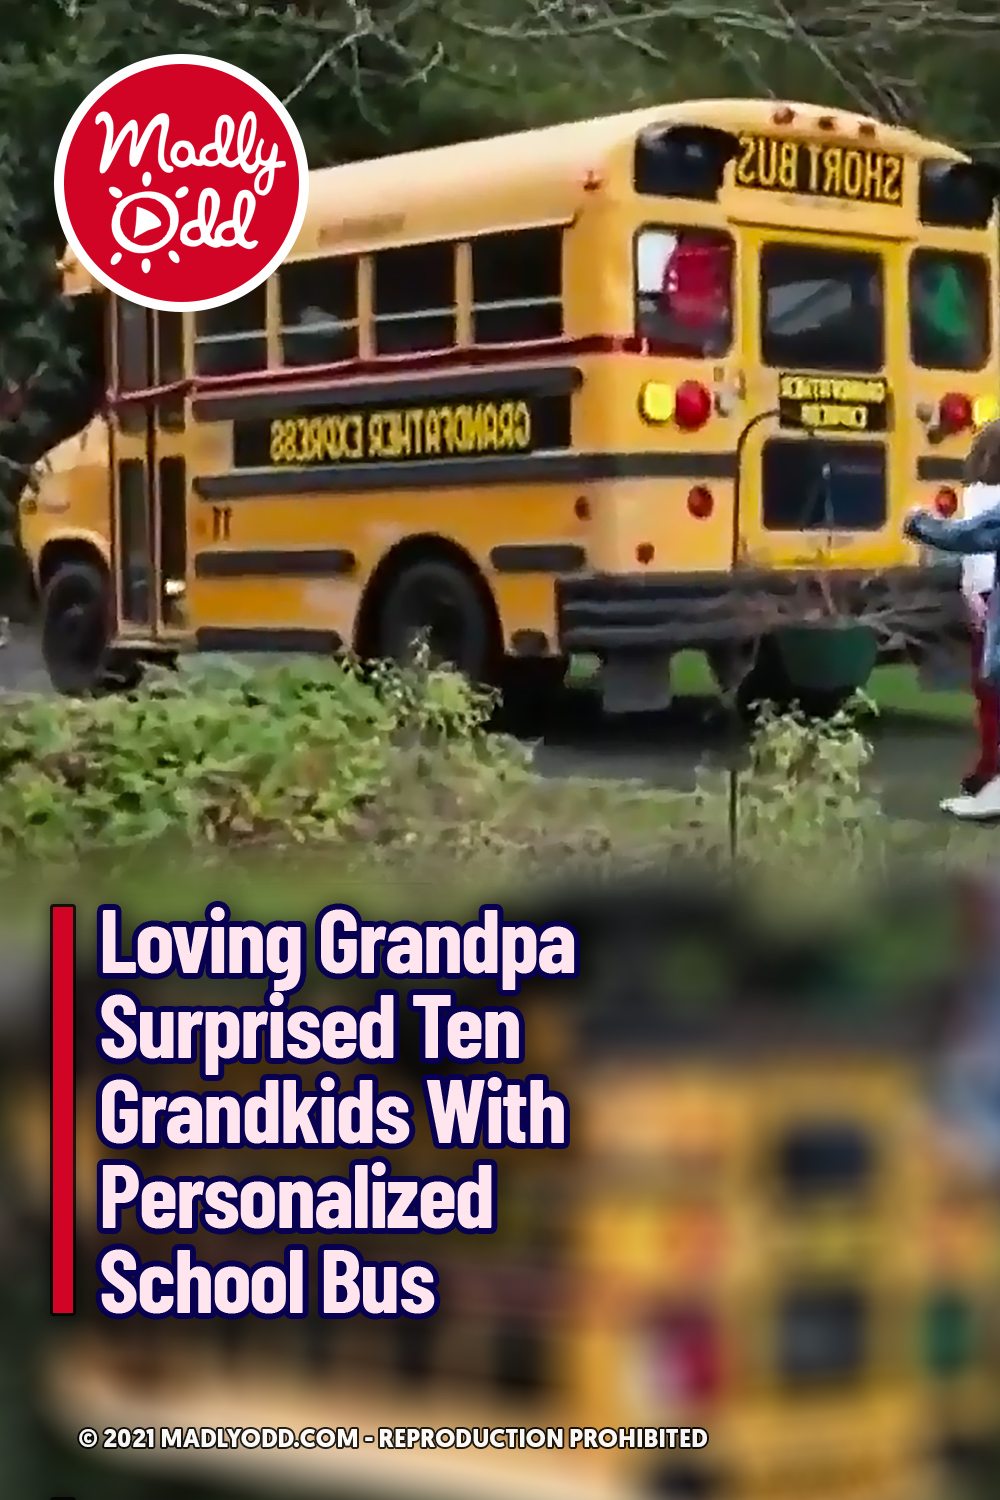 Loving Grandpa Surprised Ten Grandkids With Personalized School Bus